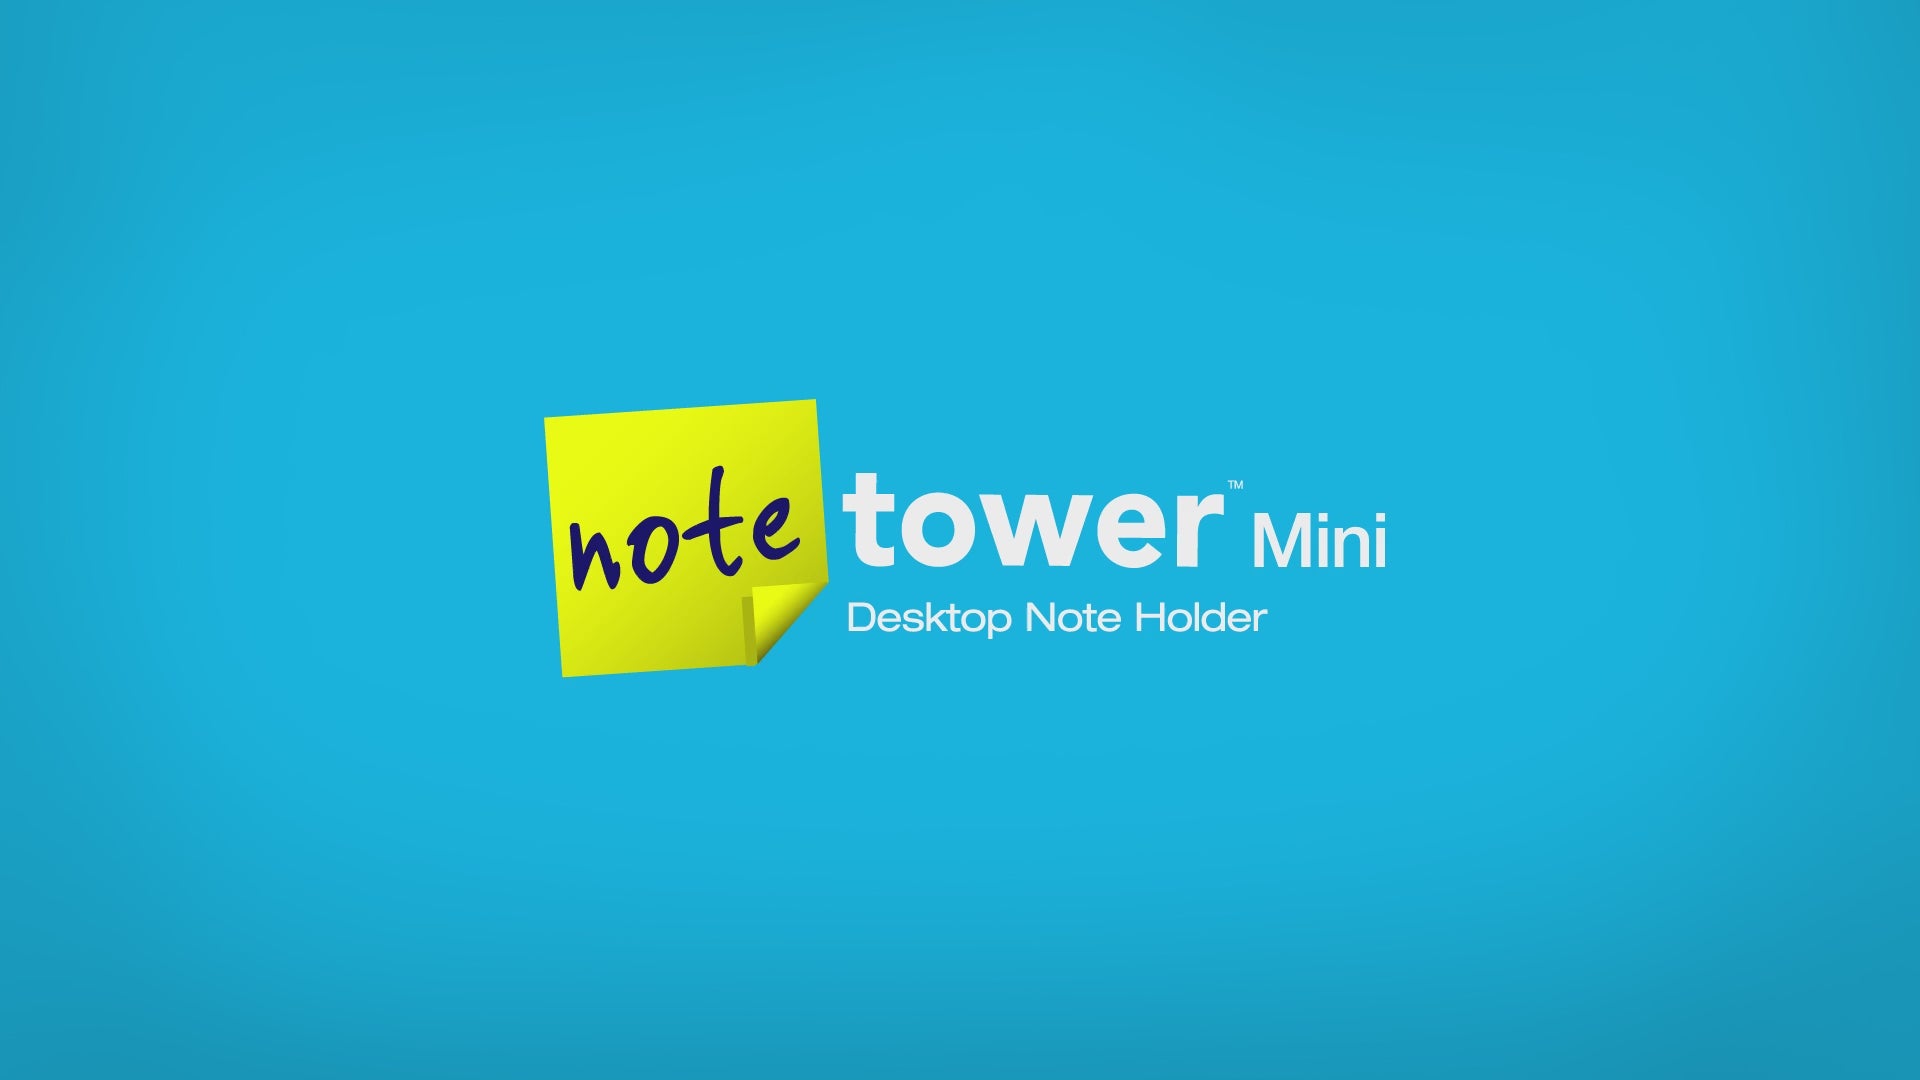 Note Tower Desktop Mini